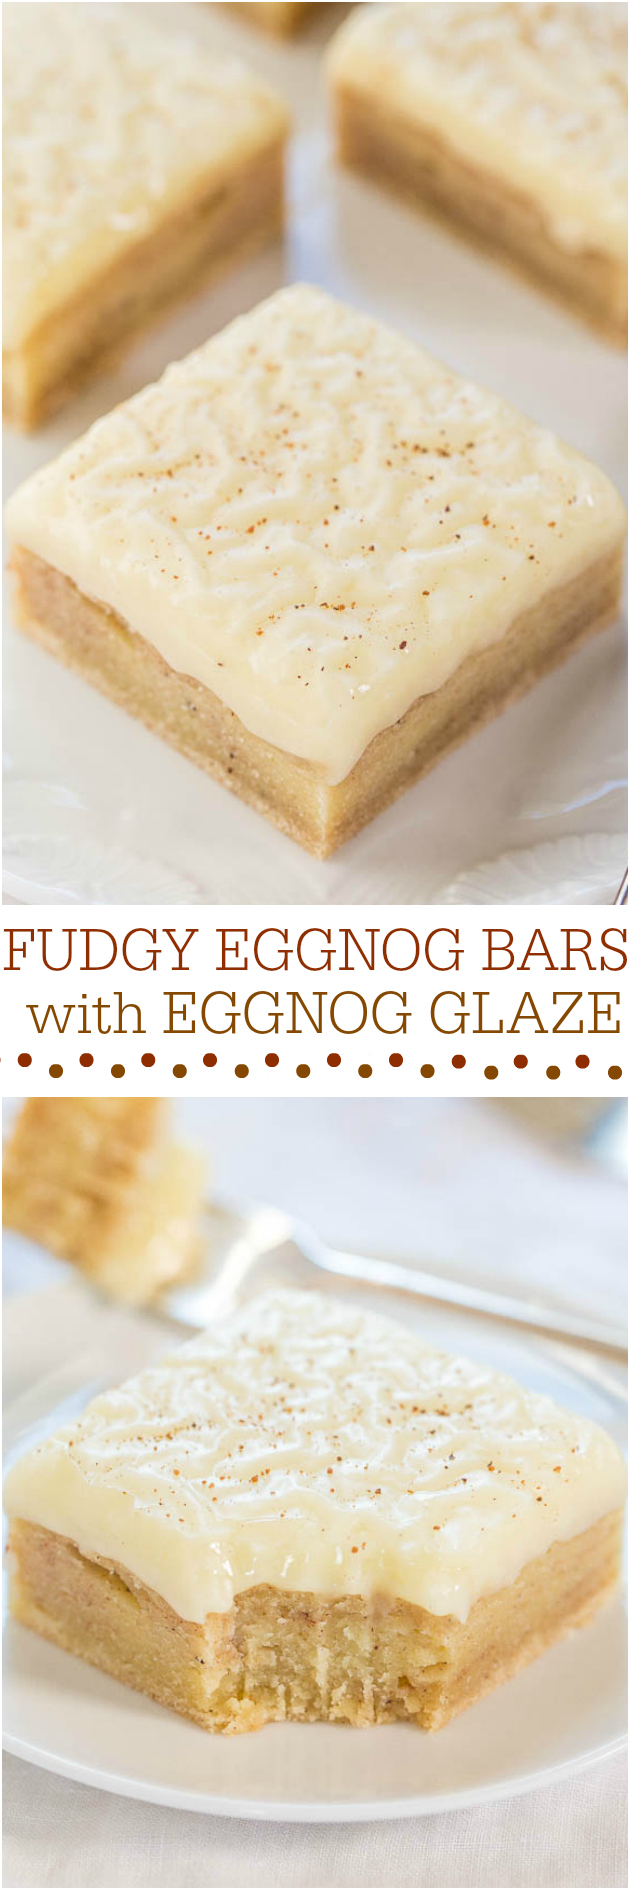 Fudgy Eggnog Bars with Eggnog Glaze - The eggnog equivalent of fudgy brownies crossed with eggnog fudge! Best use ever of eggnog!!